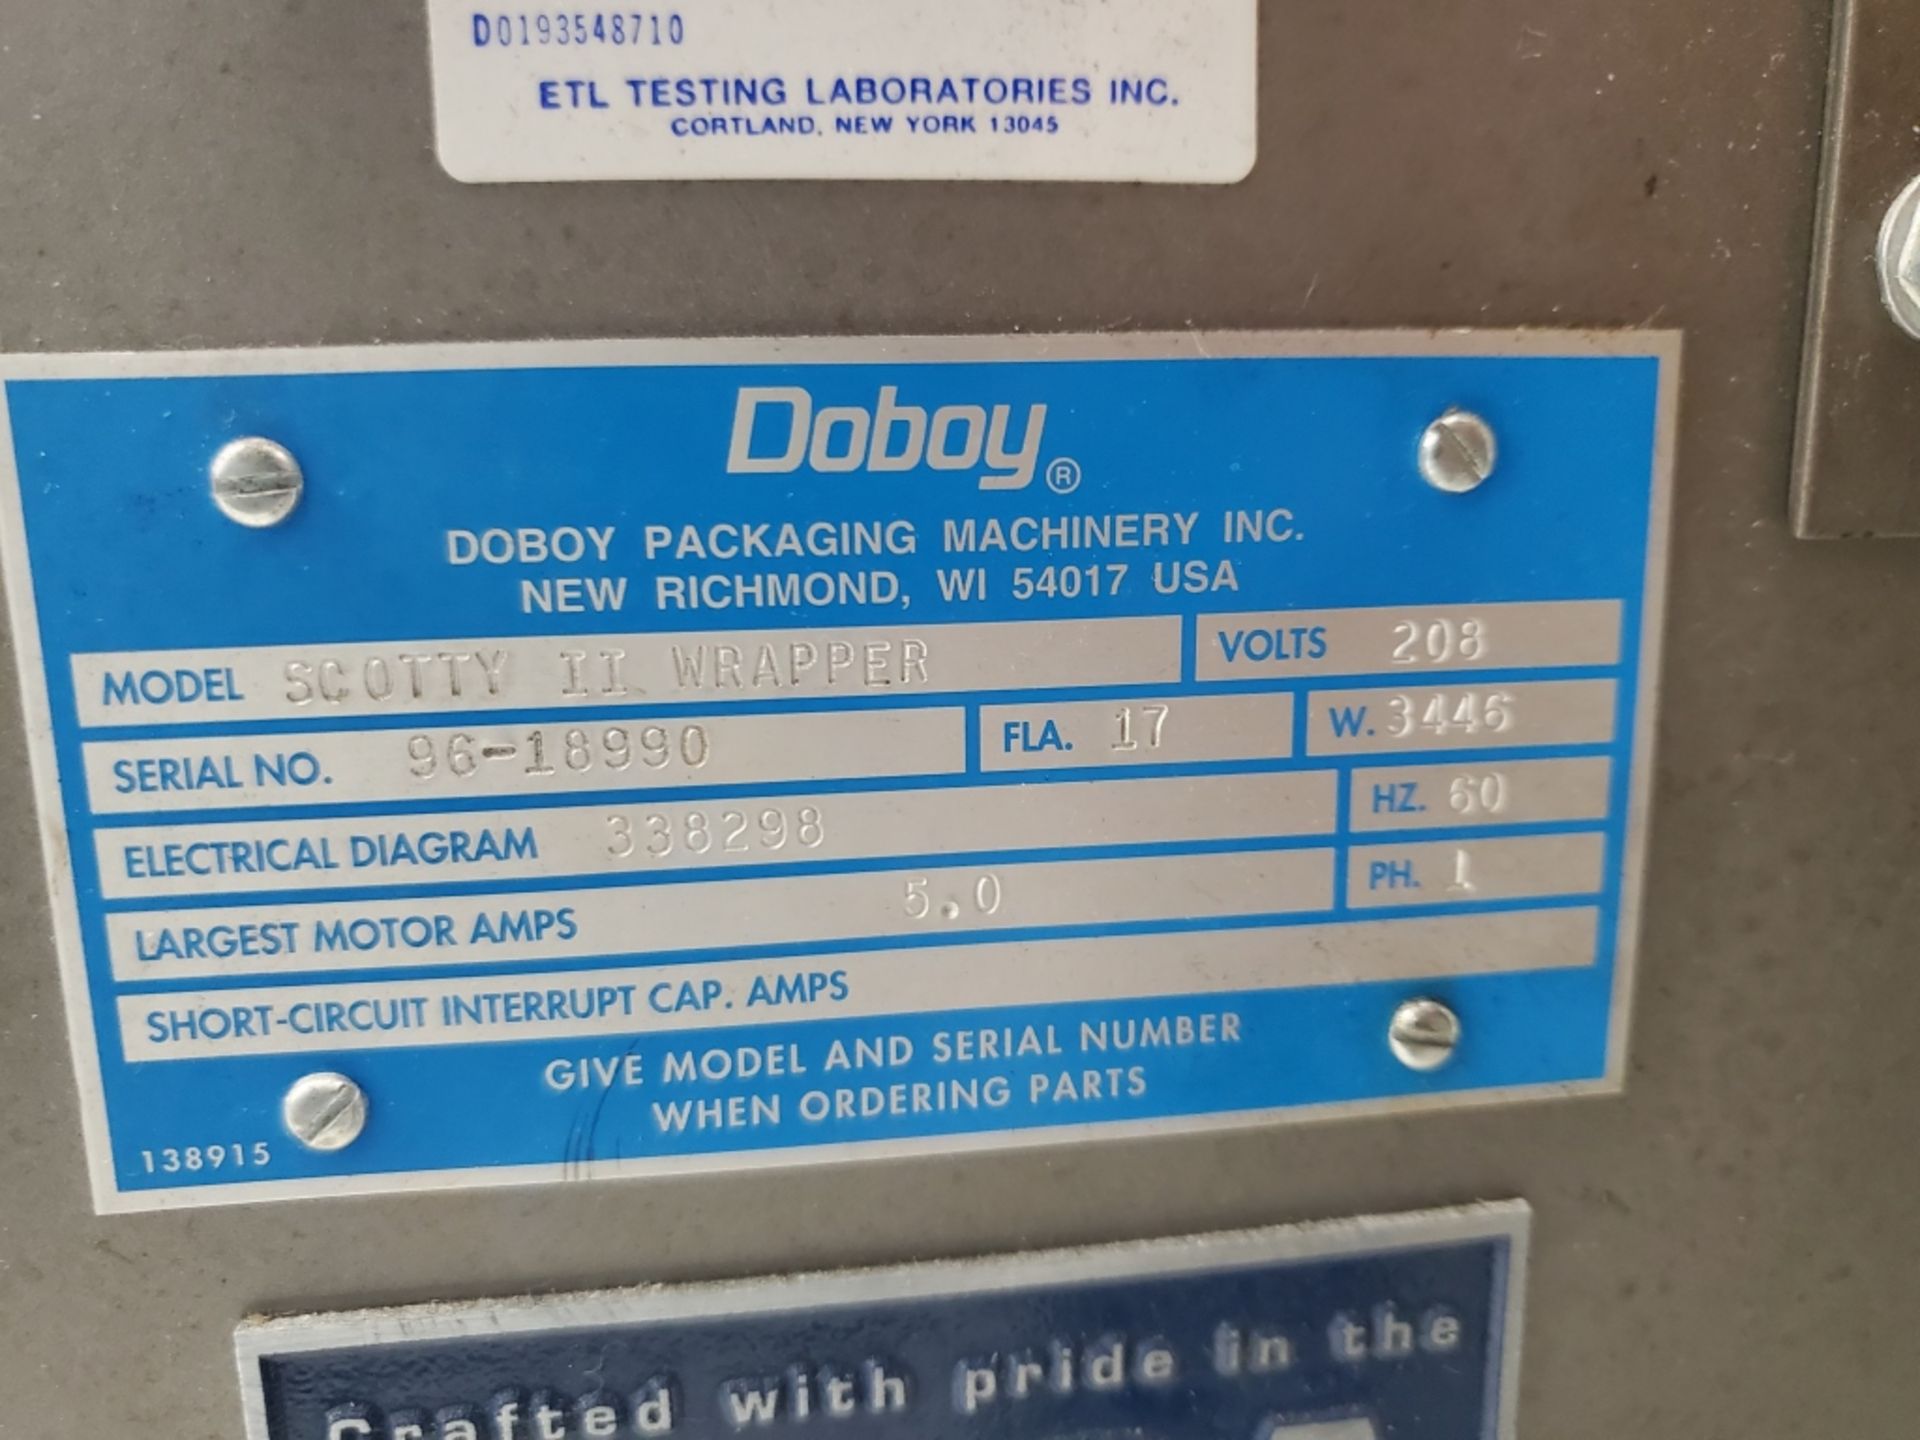 Doboy Model Scotty II Wrapper Over Wrapper 96-18990, 208V, 1ph, 60Hz - Image 8 of 9